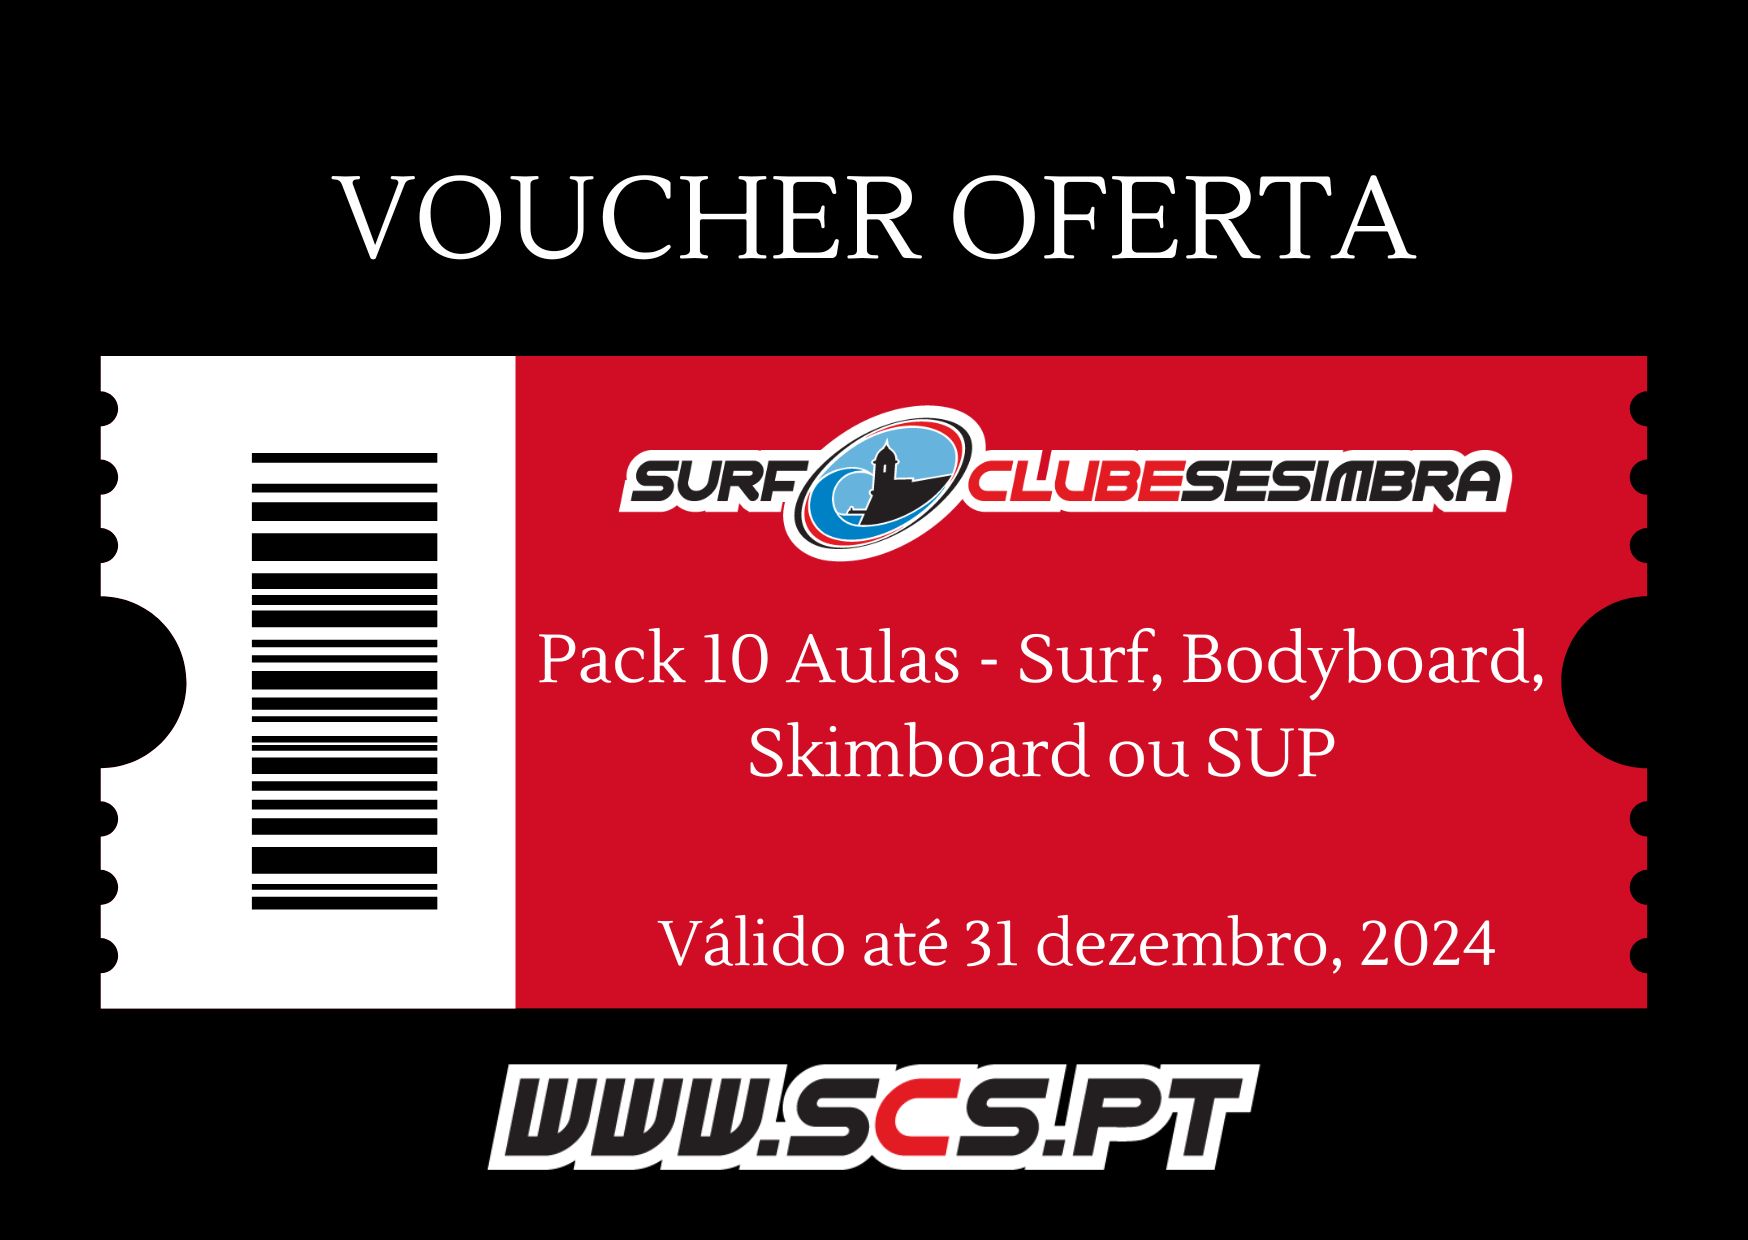 Voucher Oferta Pack 10 Aulas - Surf, Bodyboard, Skimboard ou SUP